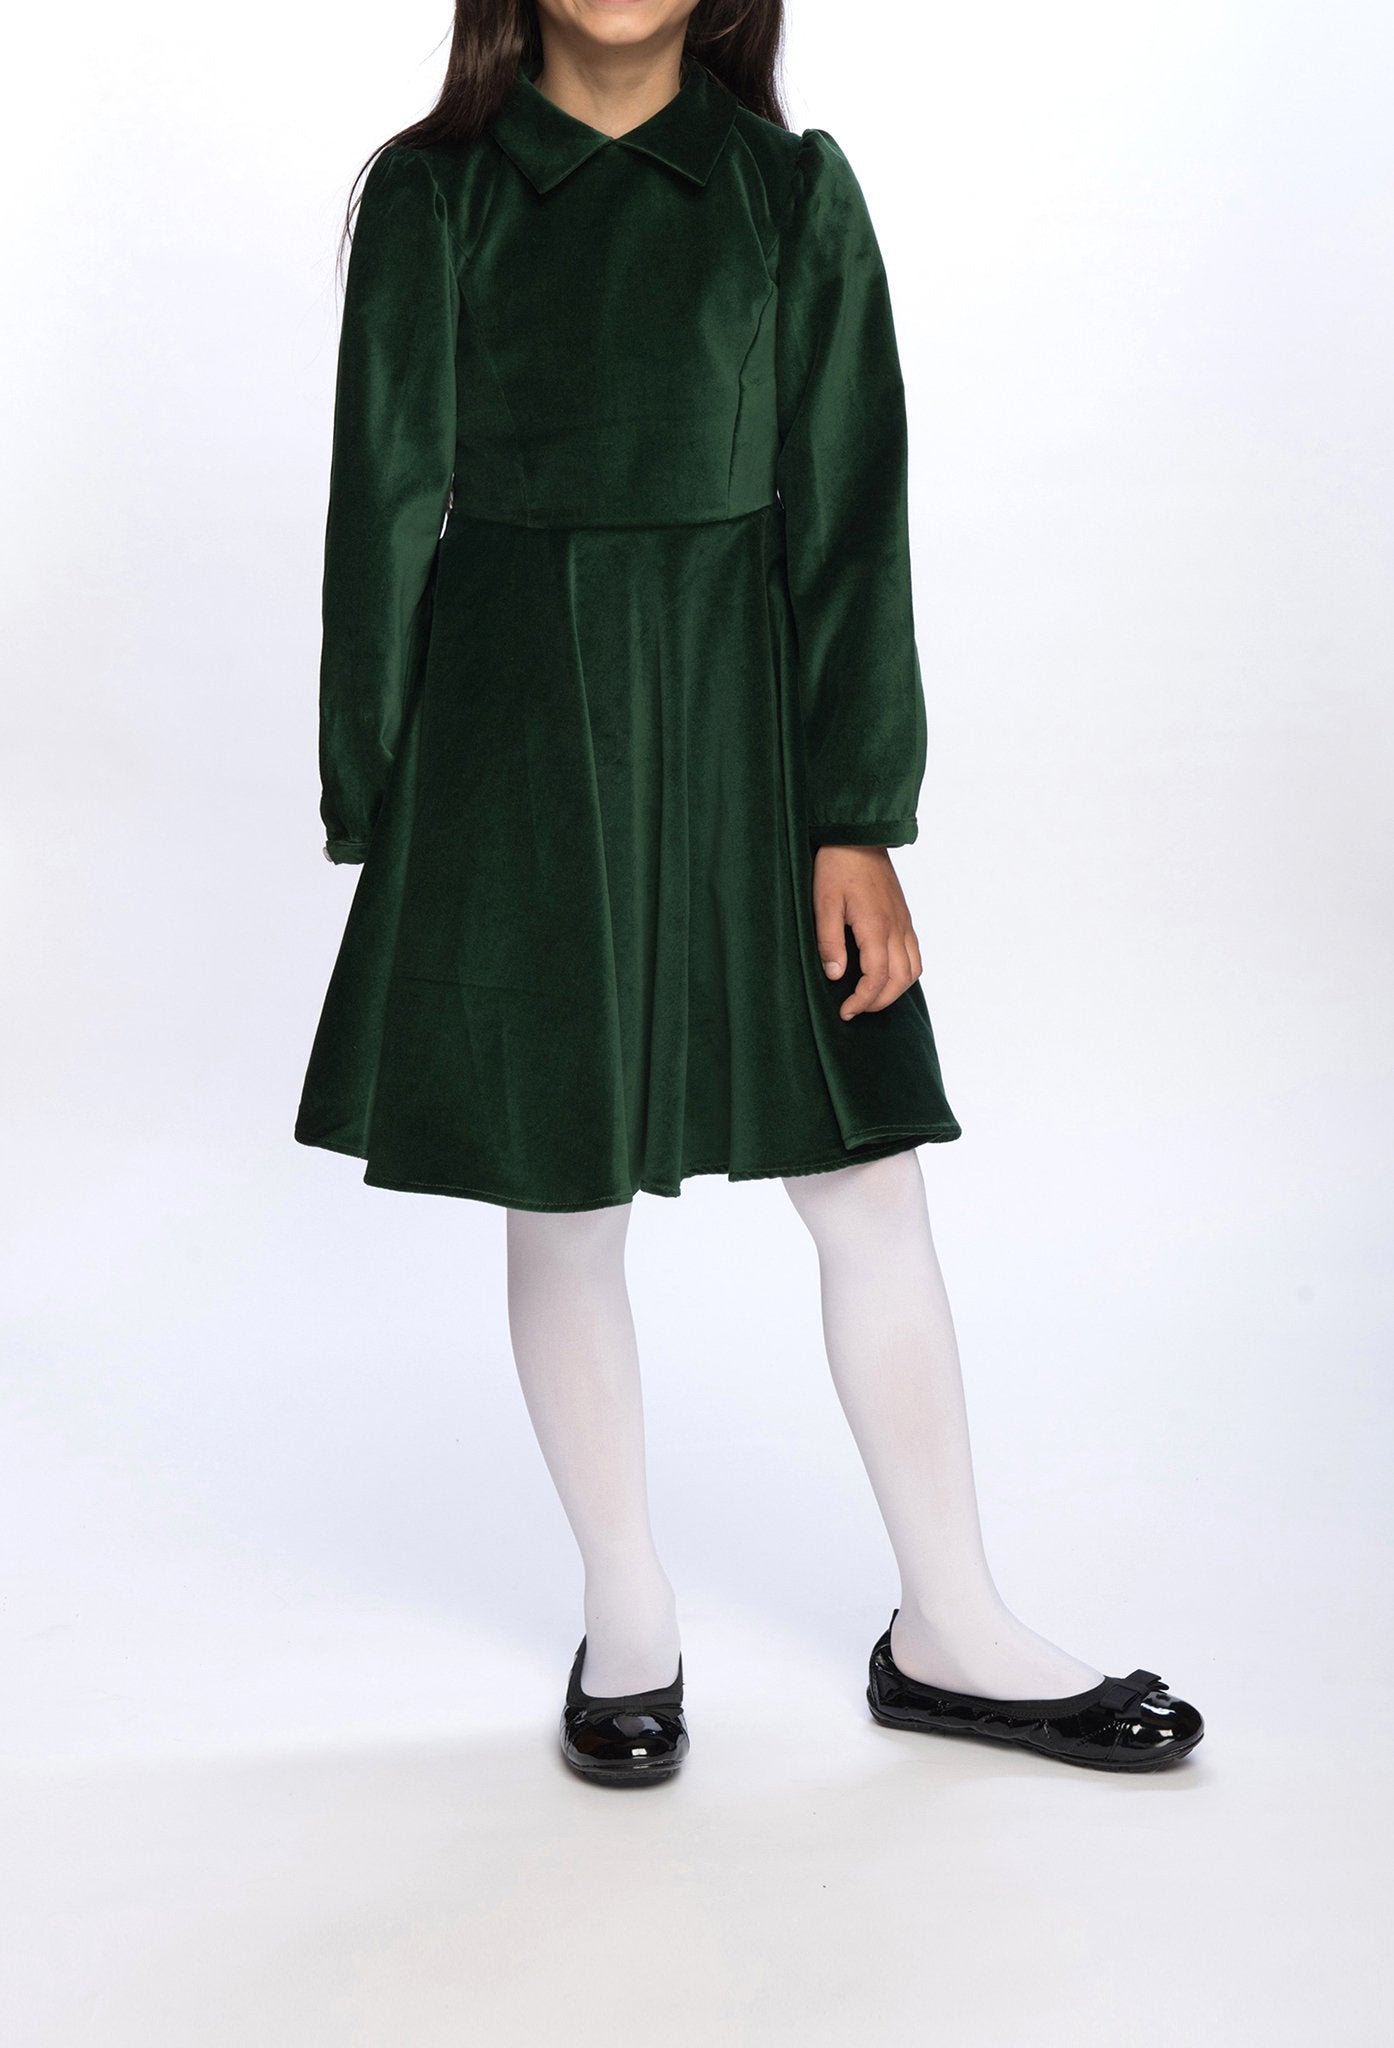 A girl standing in a green velvet dress.